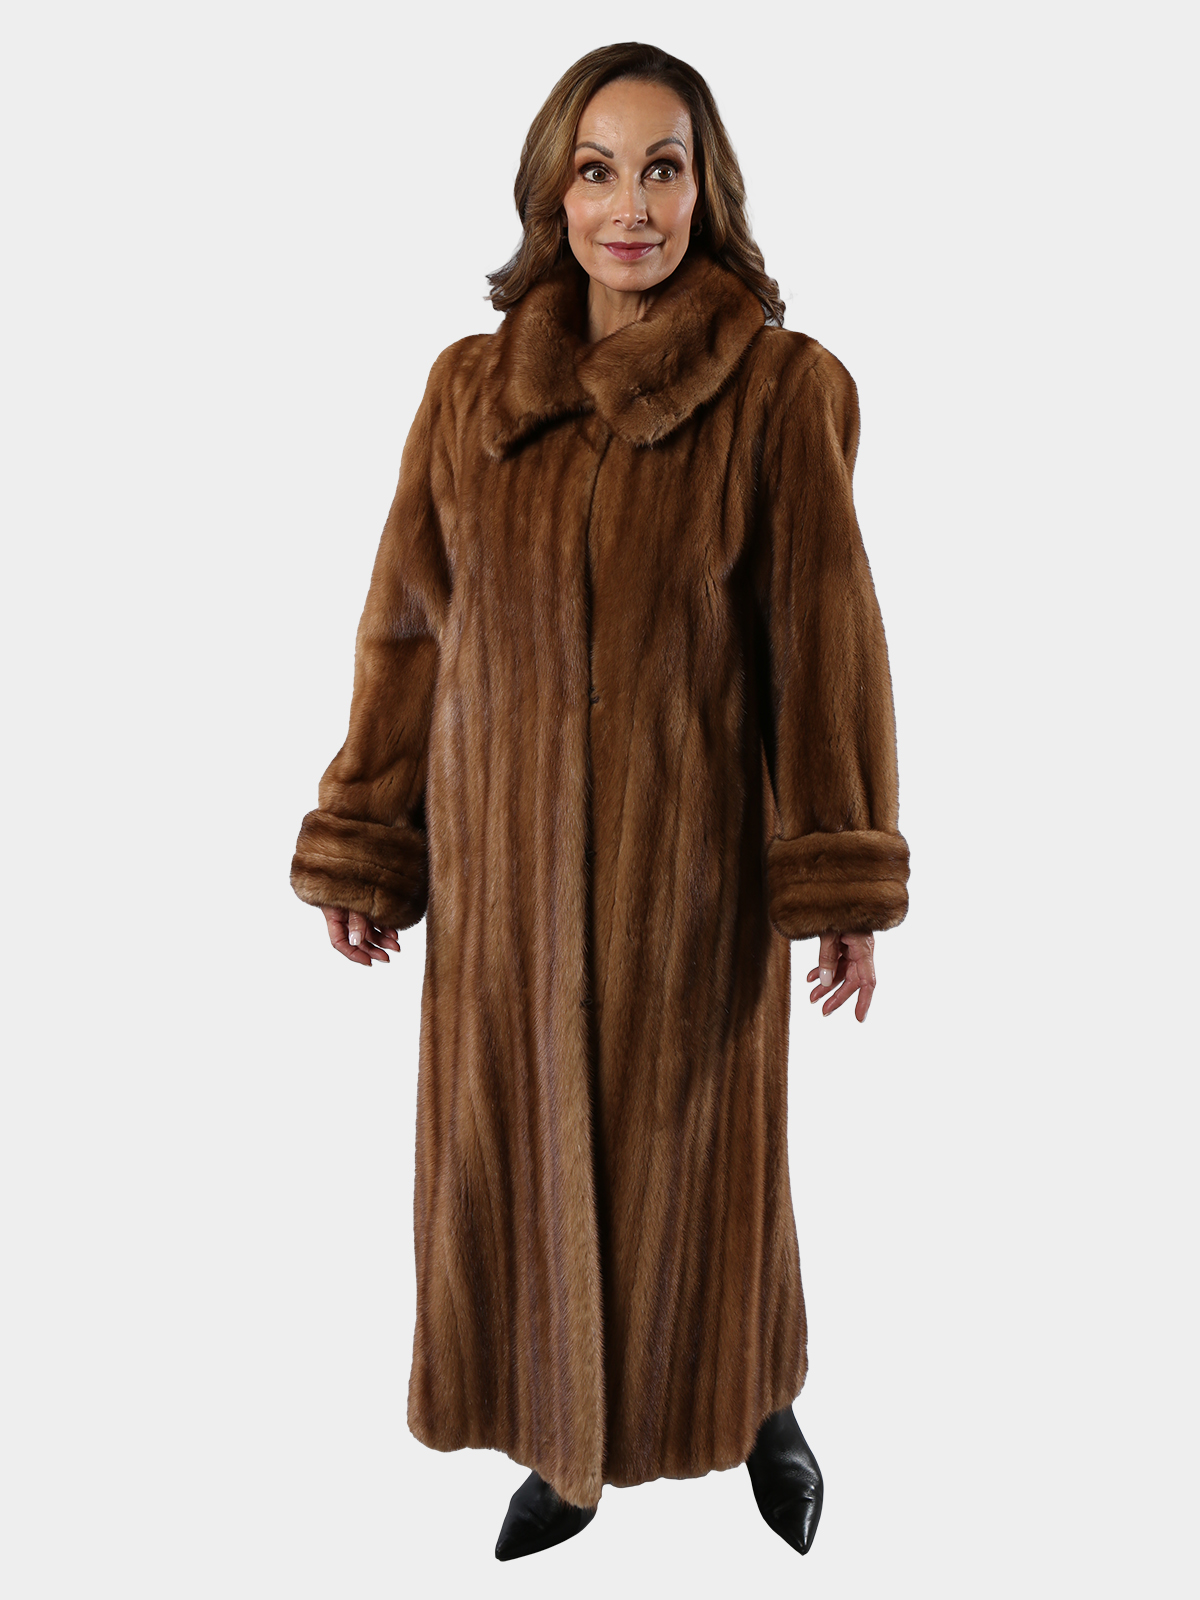 Demi Buff Women's Mink Fur Coat